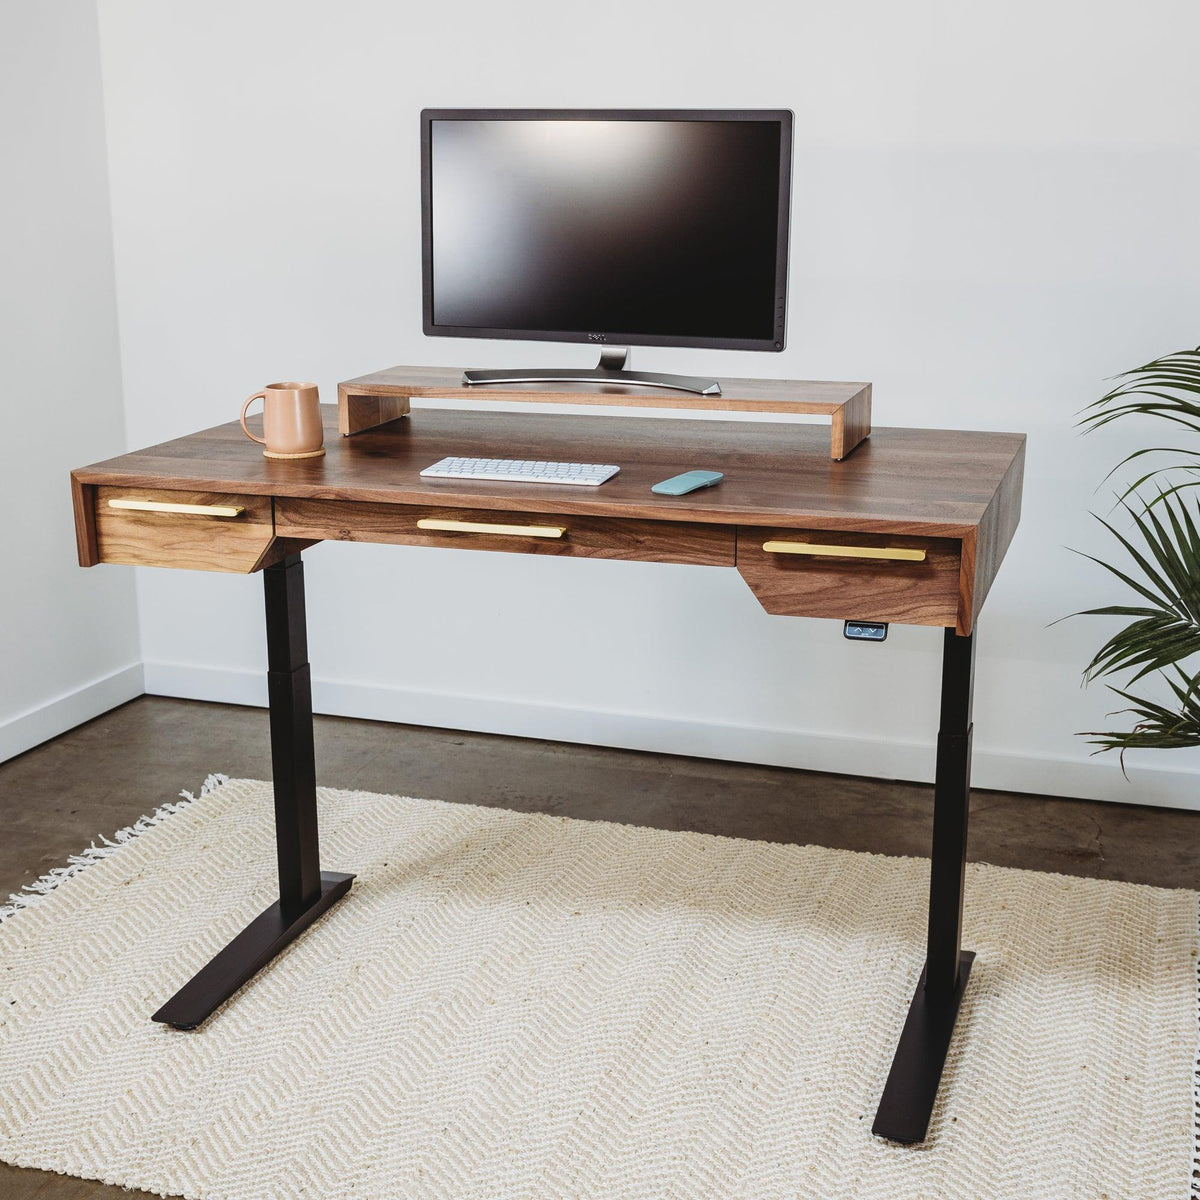 Wood Computer Stand Monitor Stand Wood Desk Accessories Monitor Organizer  Desk Shelf Riser Monitor Riser Home Office 